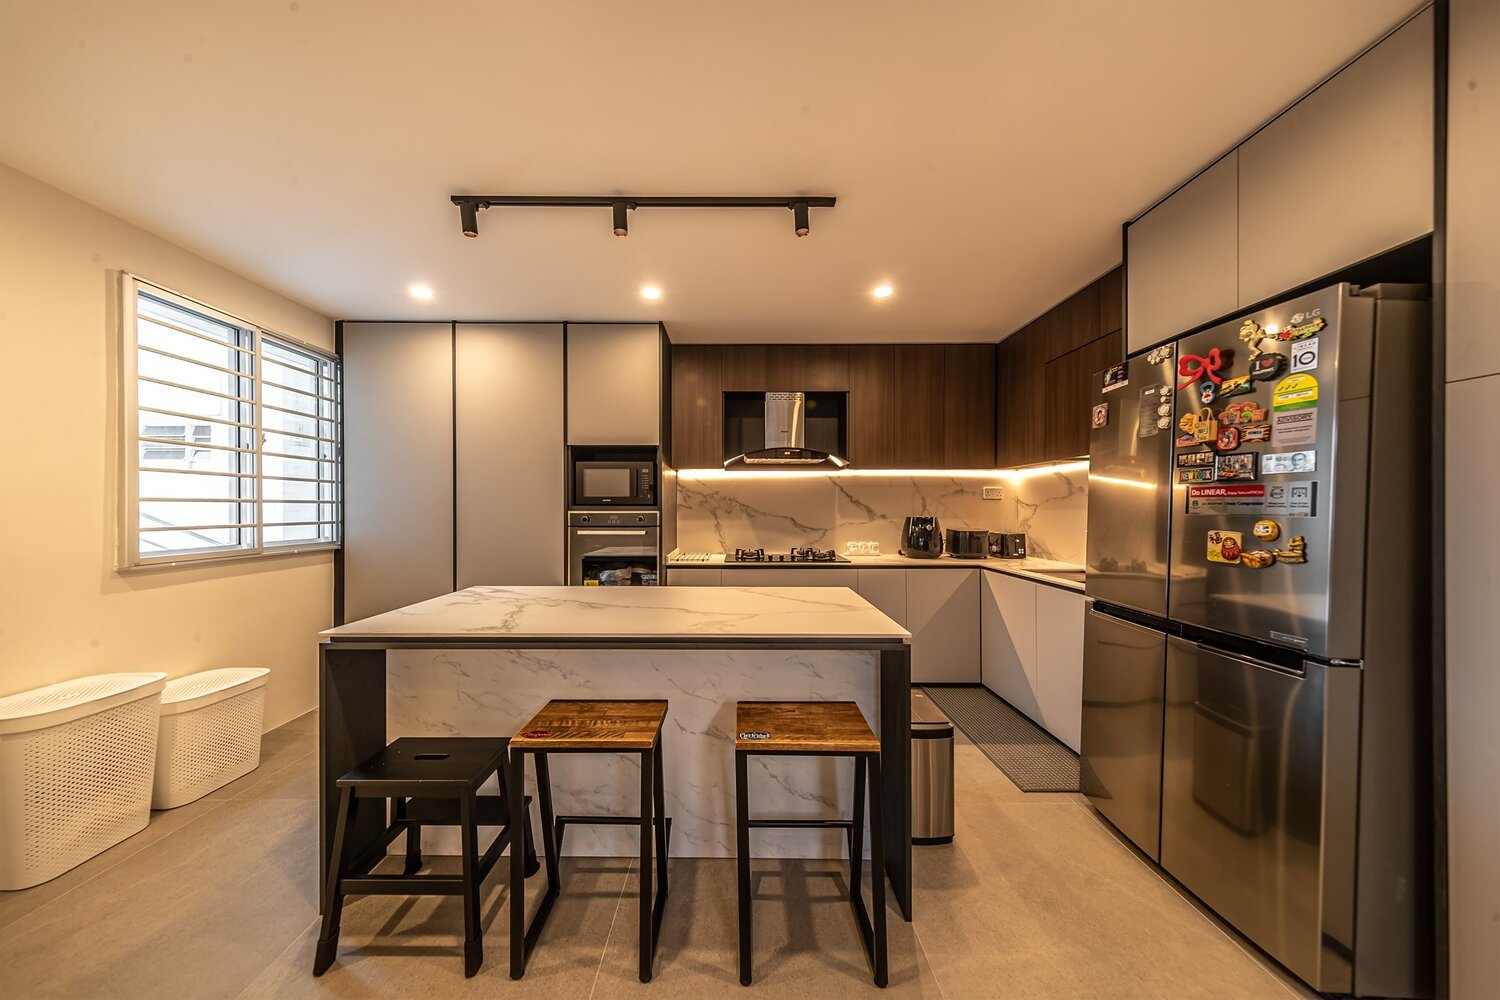 5 Room HDB Resale Kitchen Design Yishun Blk 419